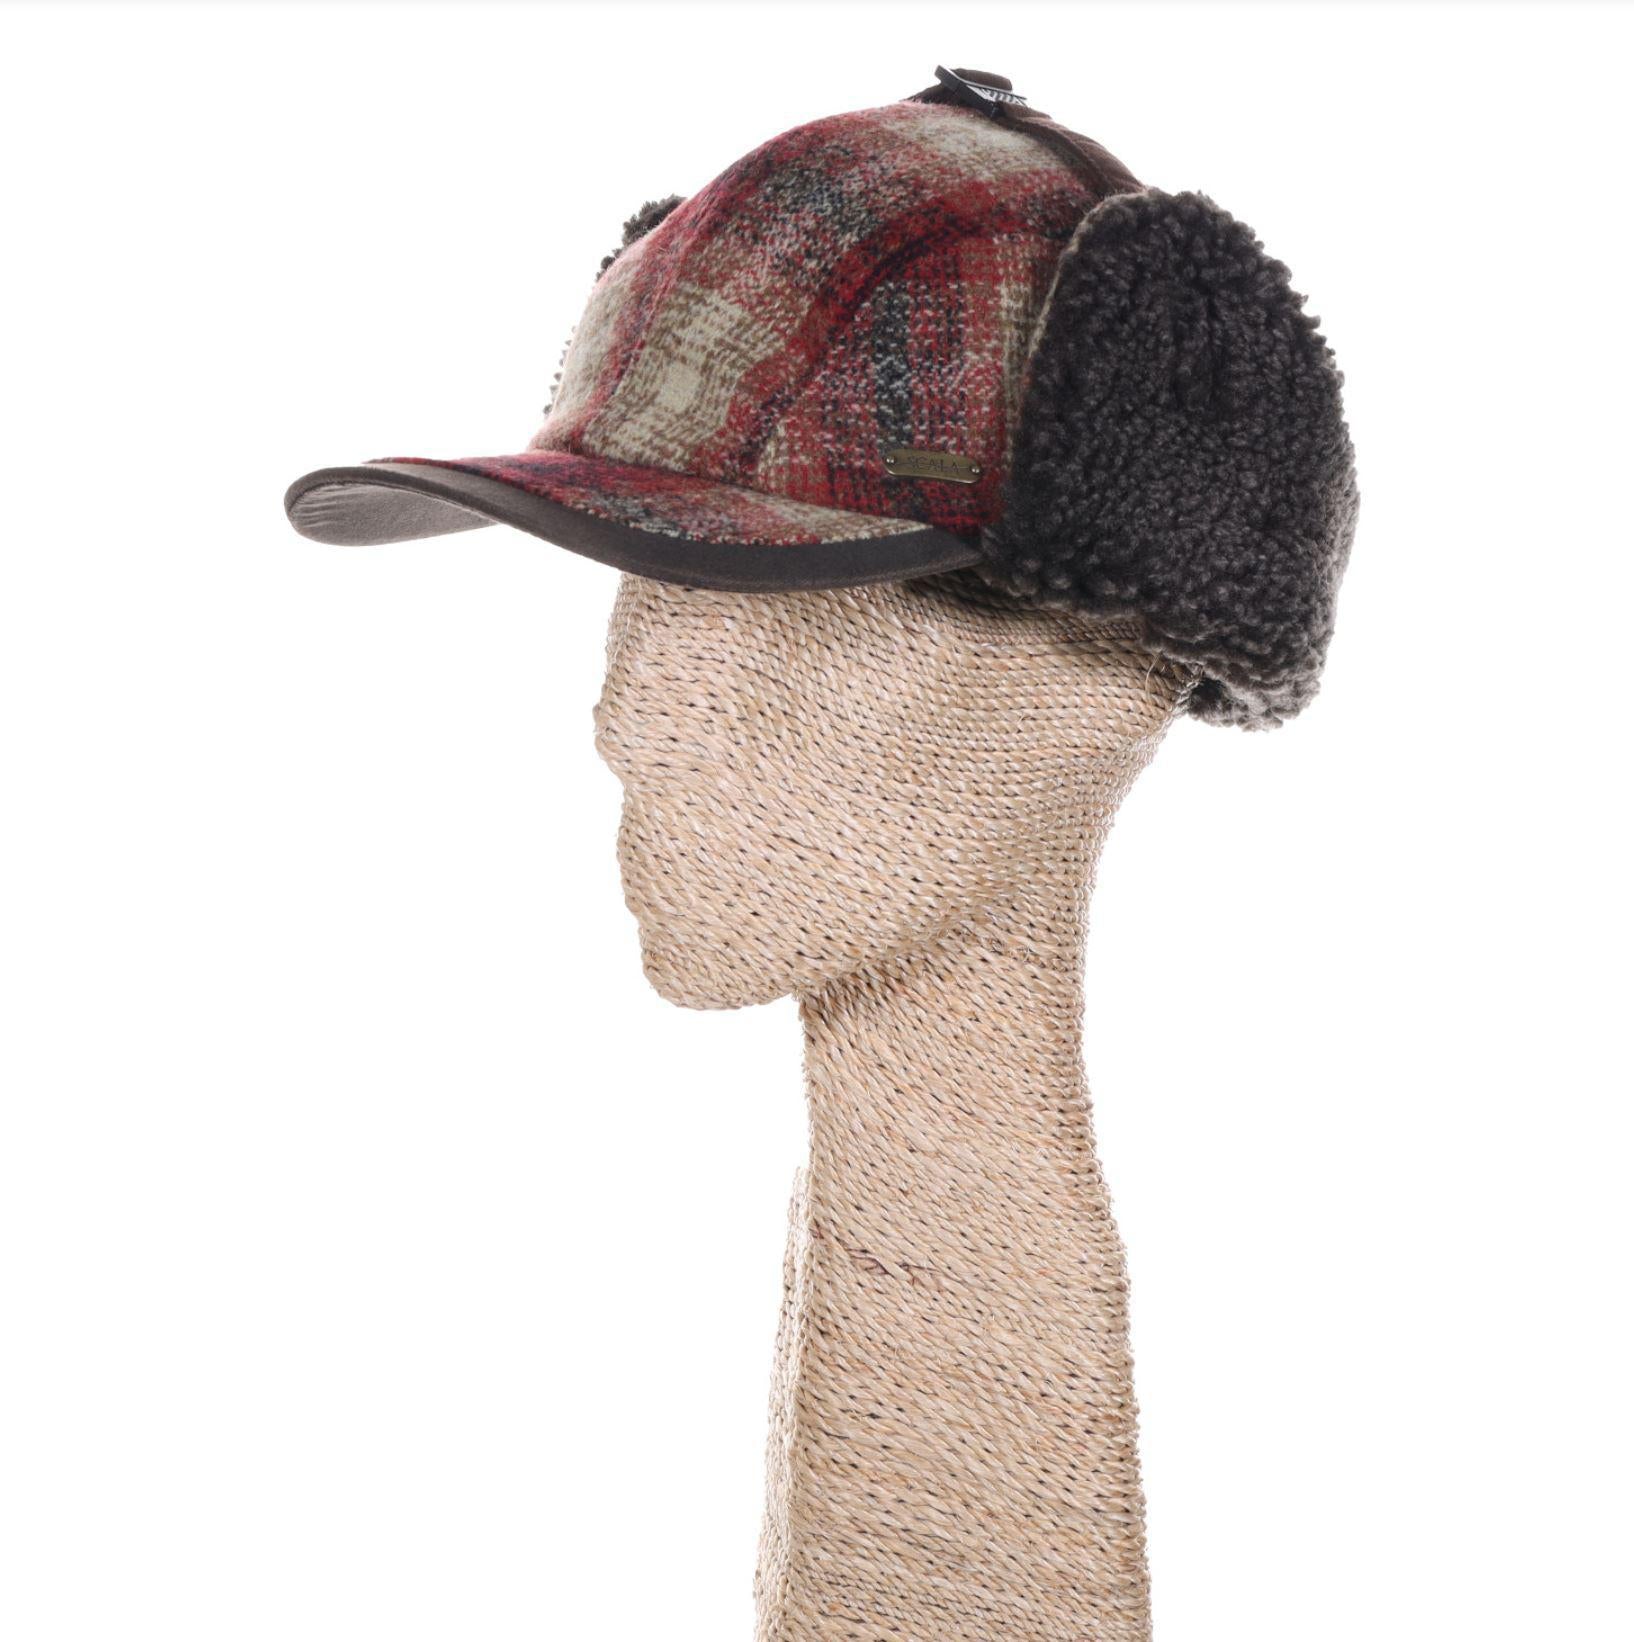 Wool Blend Winter Cap with Ear Flap| Burgundy